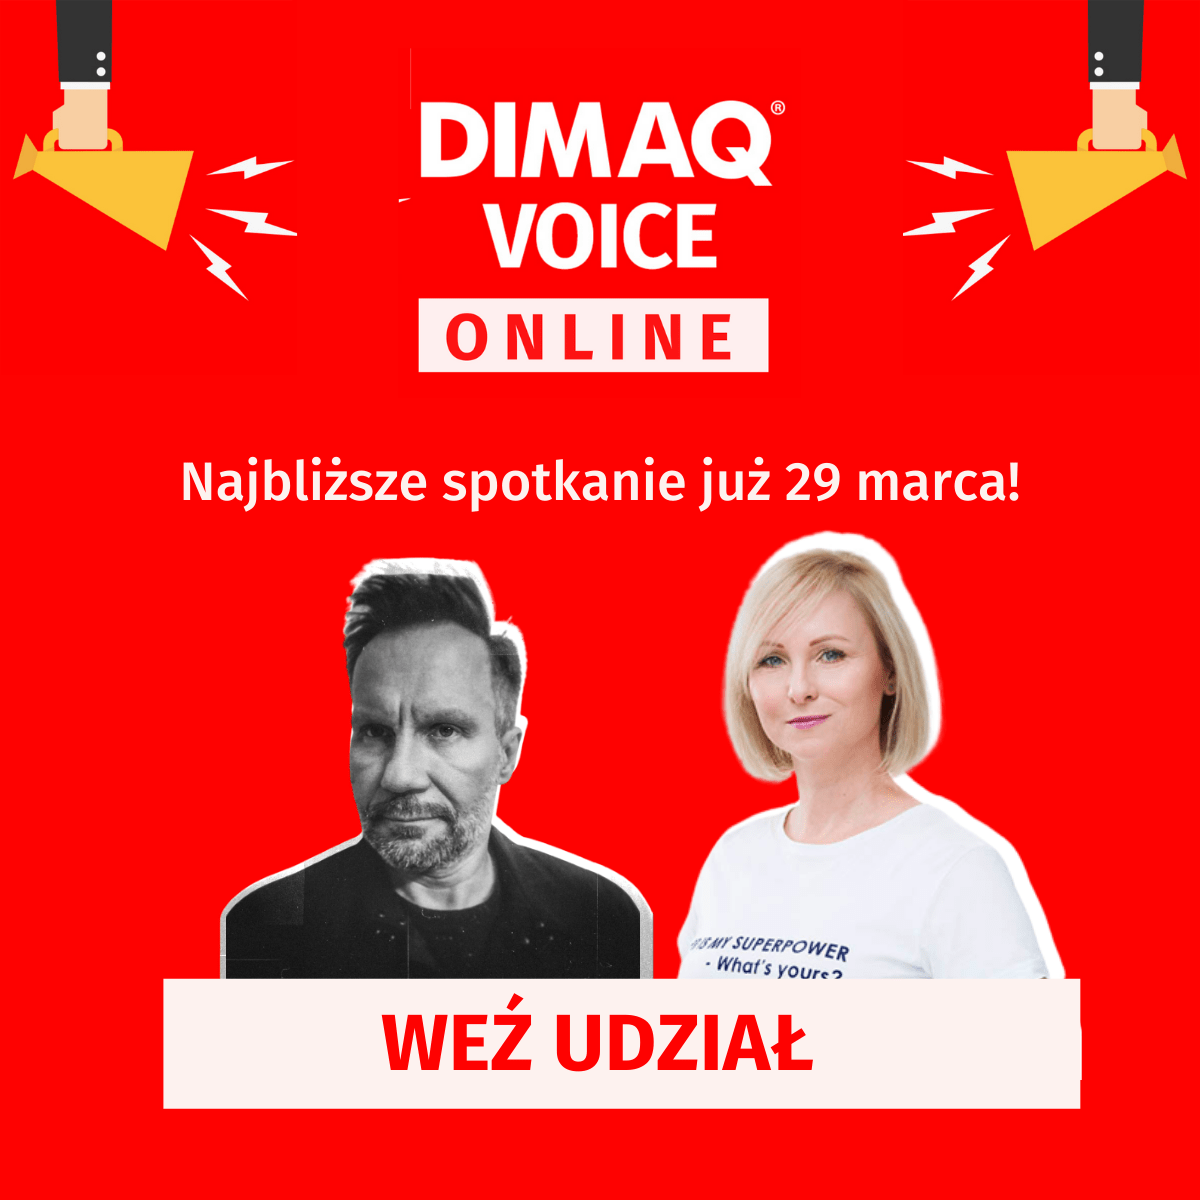 DIMAQ Voice Online już 29 marca